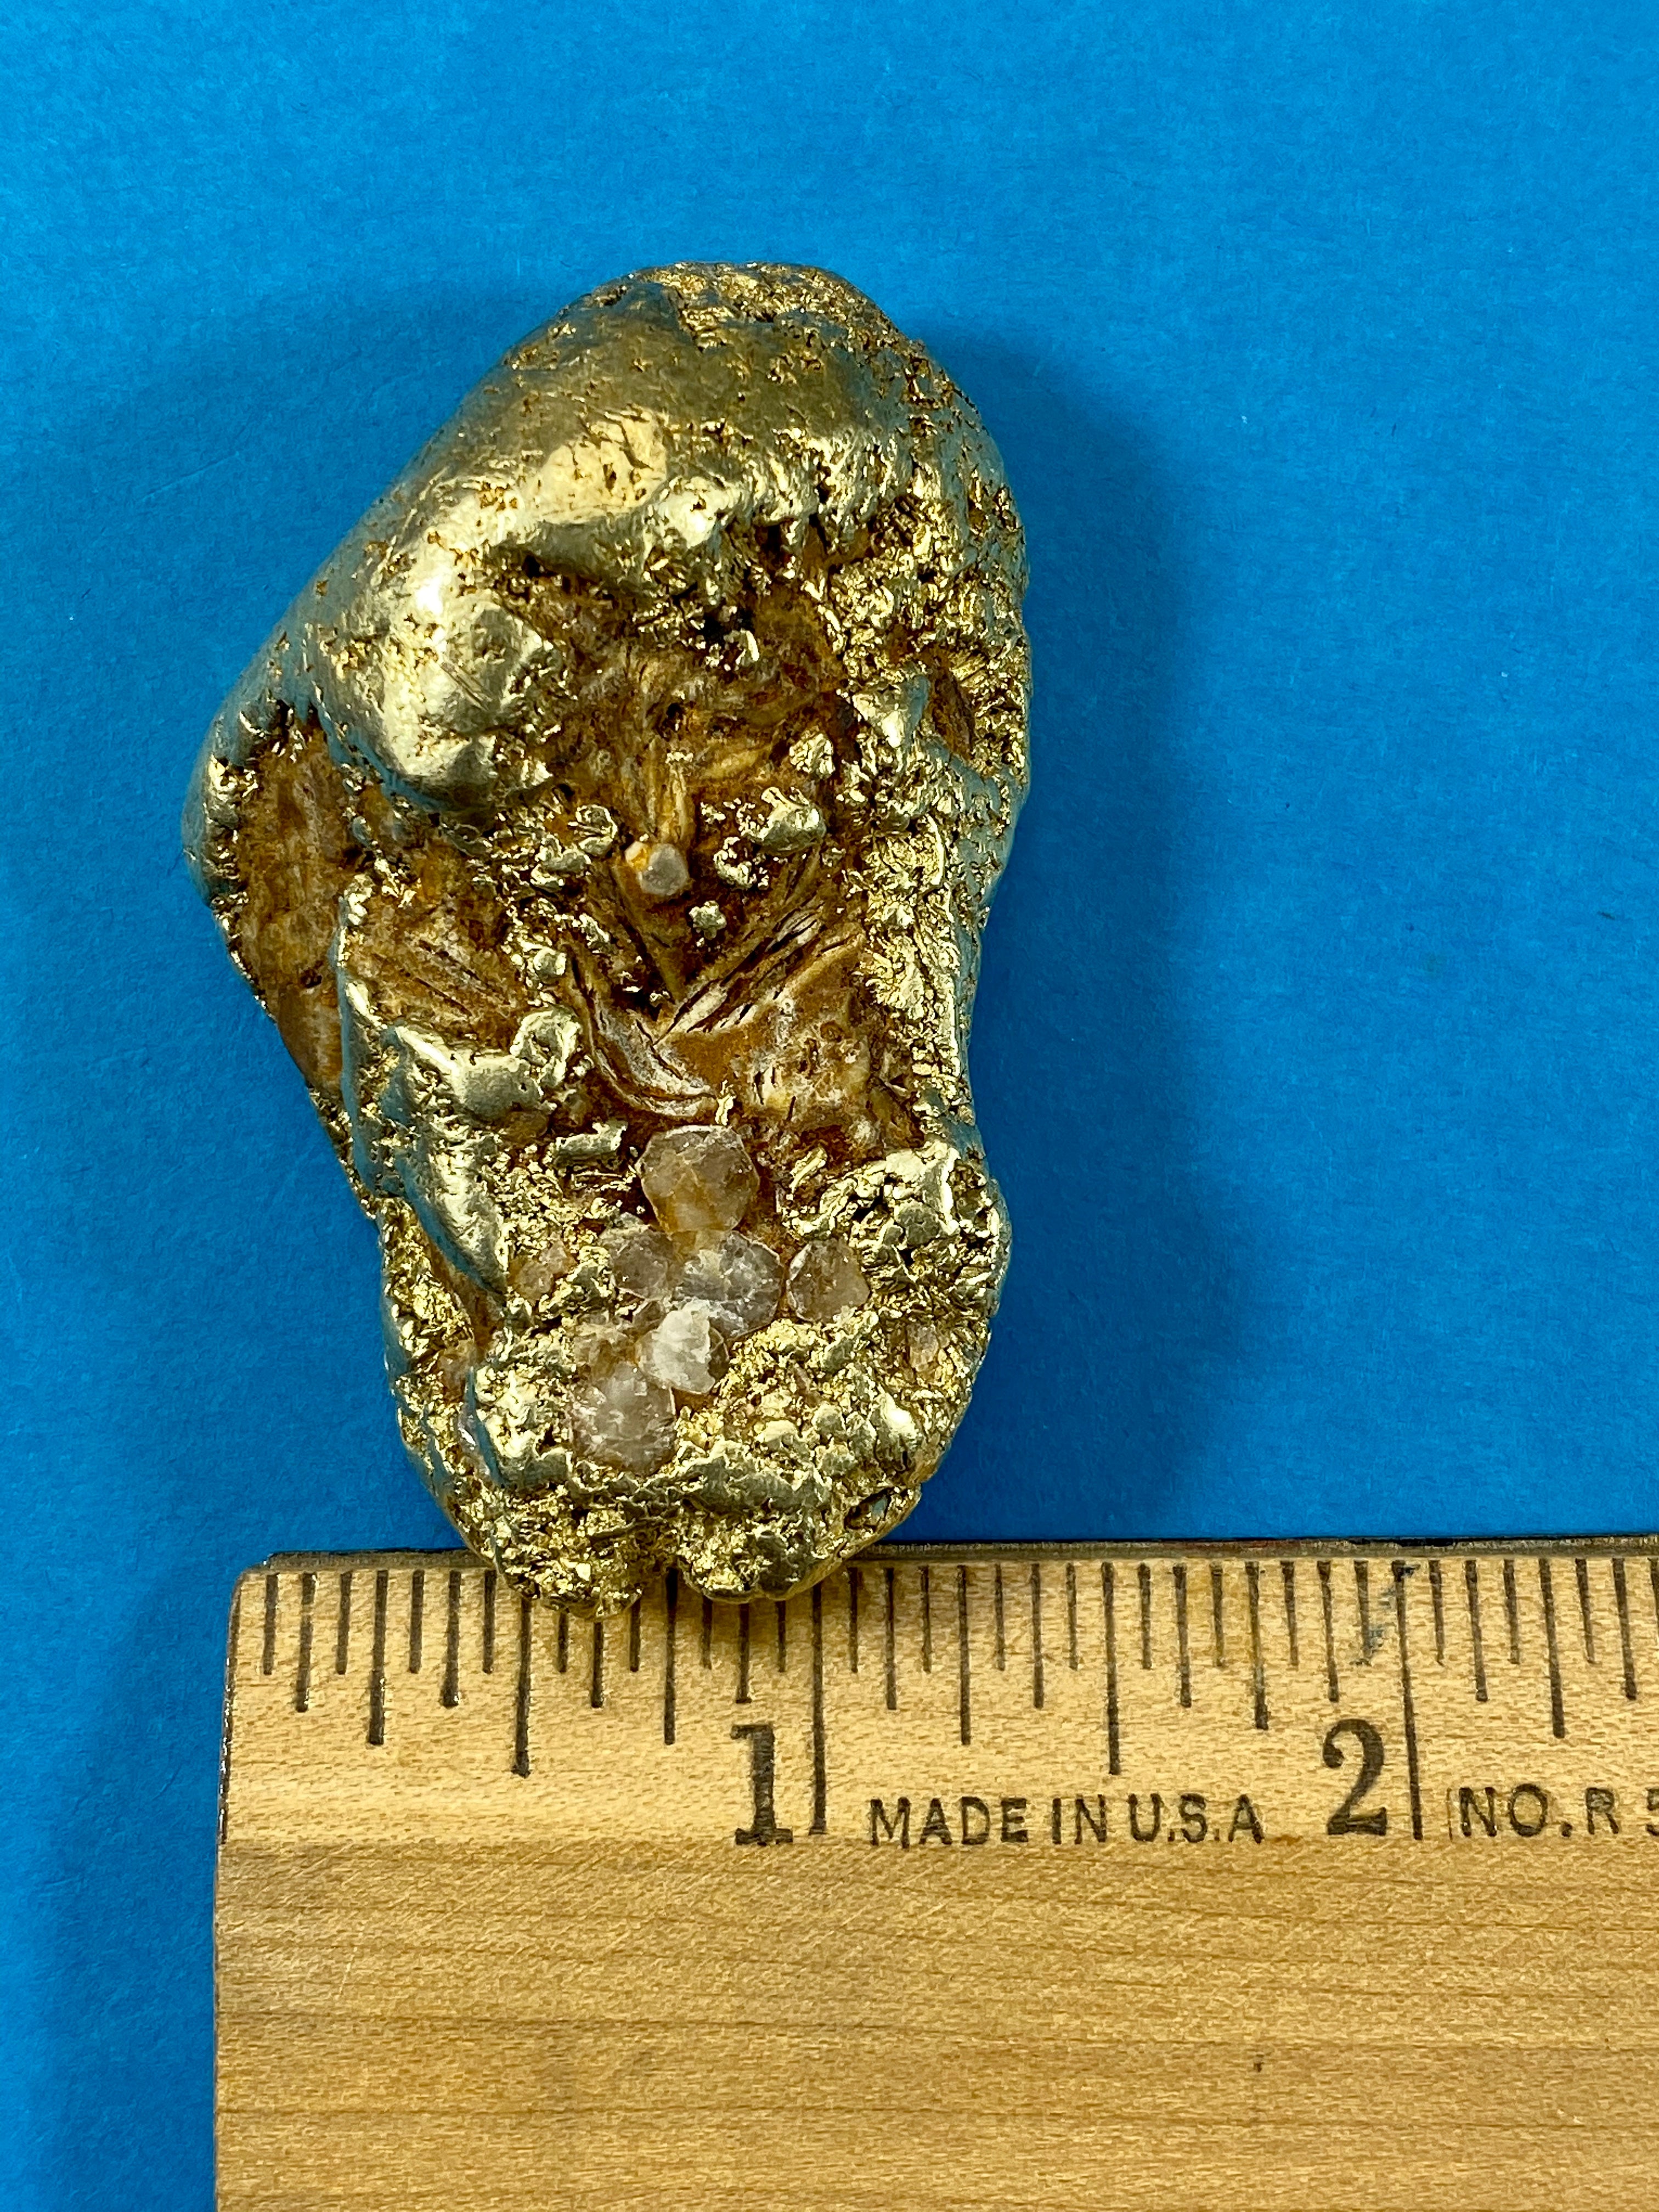 Nevada Electrum Natural Gold Nugget 151.38 Grams - 4.86 Troy Ounces. Very Rare